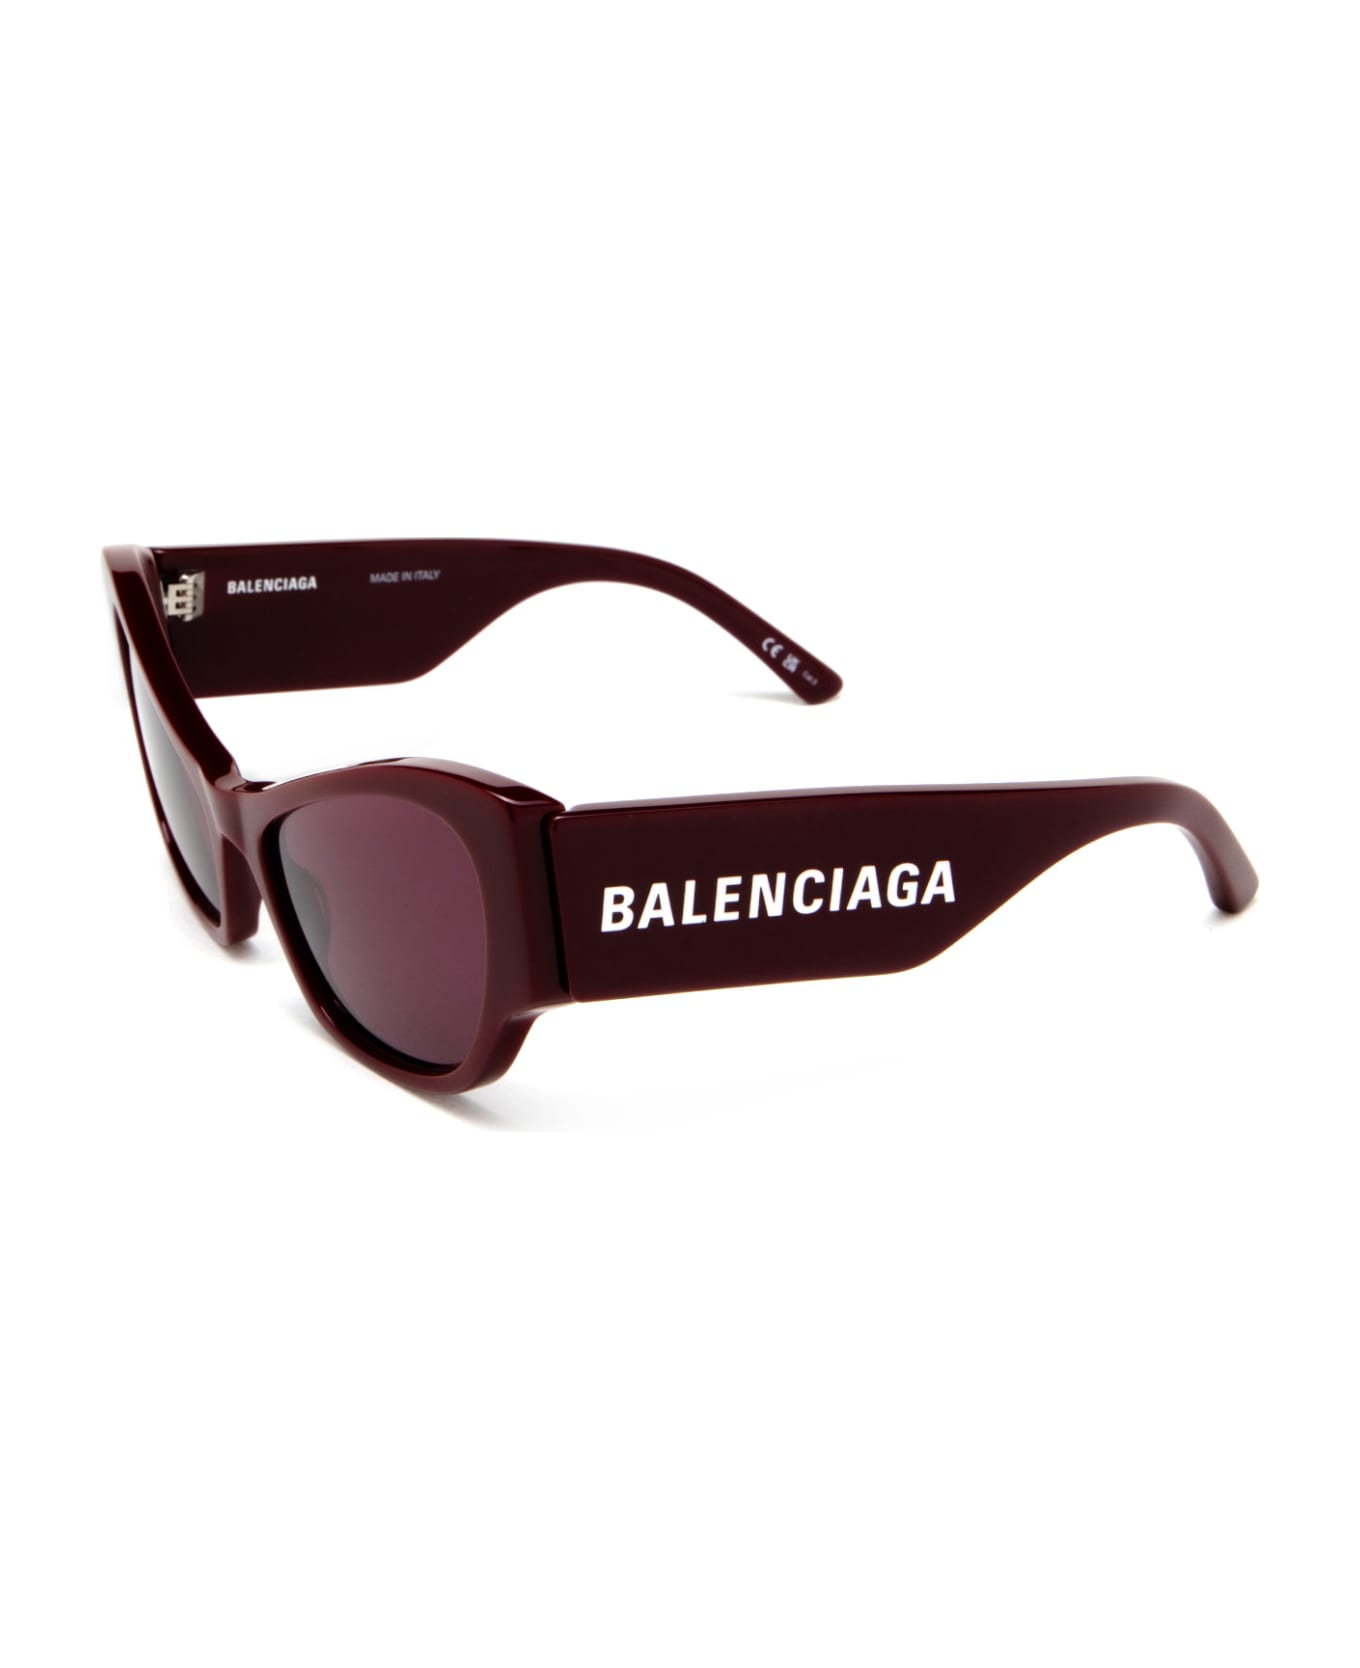 Balenciaga Eyewear Bb0259s Burgundy Sunglasses - Burgundy